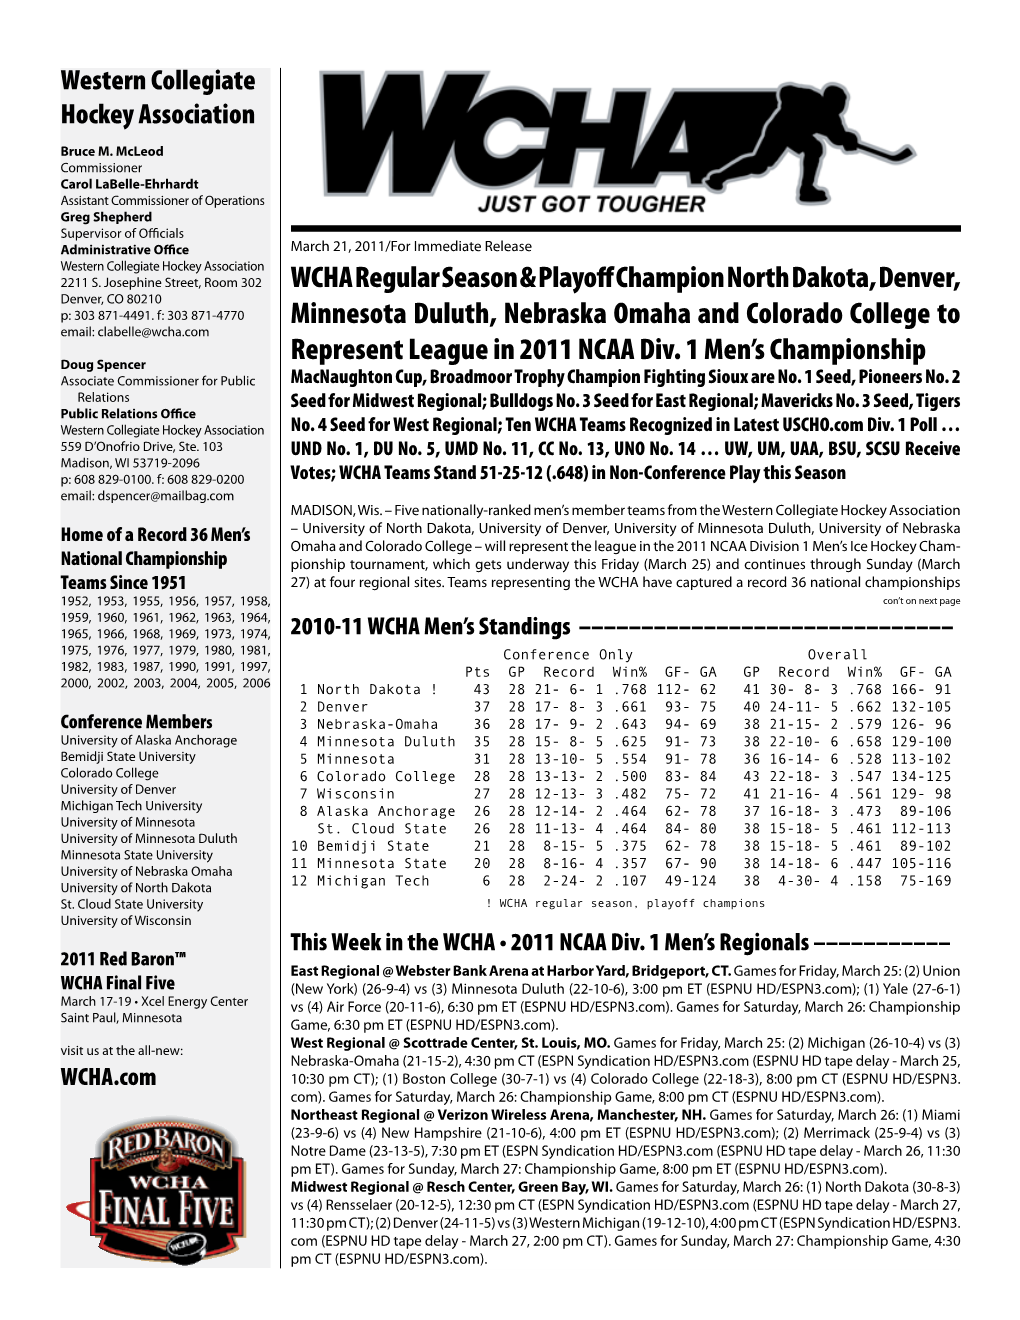 WCHA Regular Season & Playoffchampion North Dakota